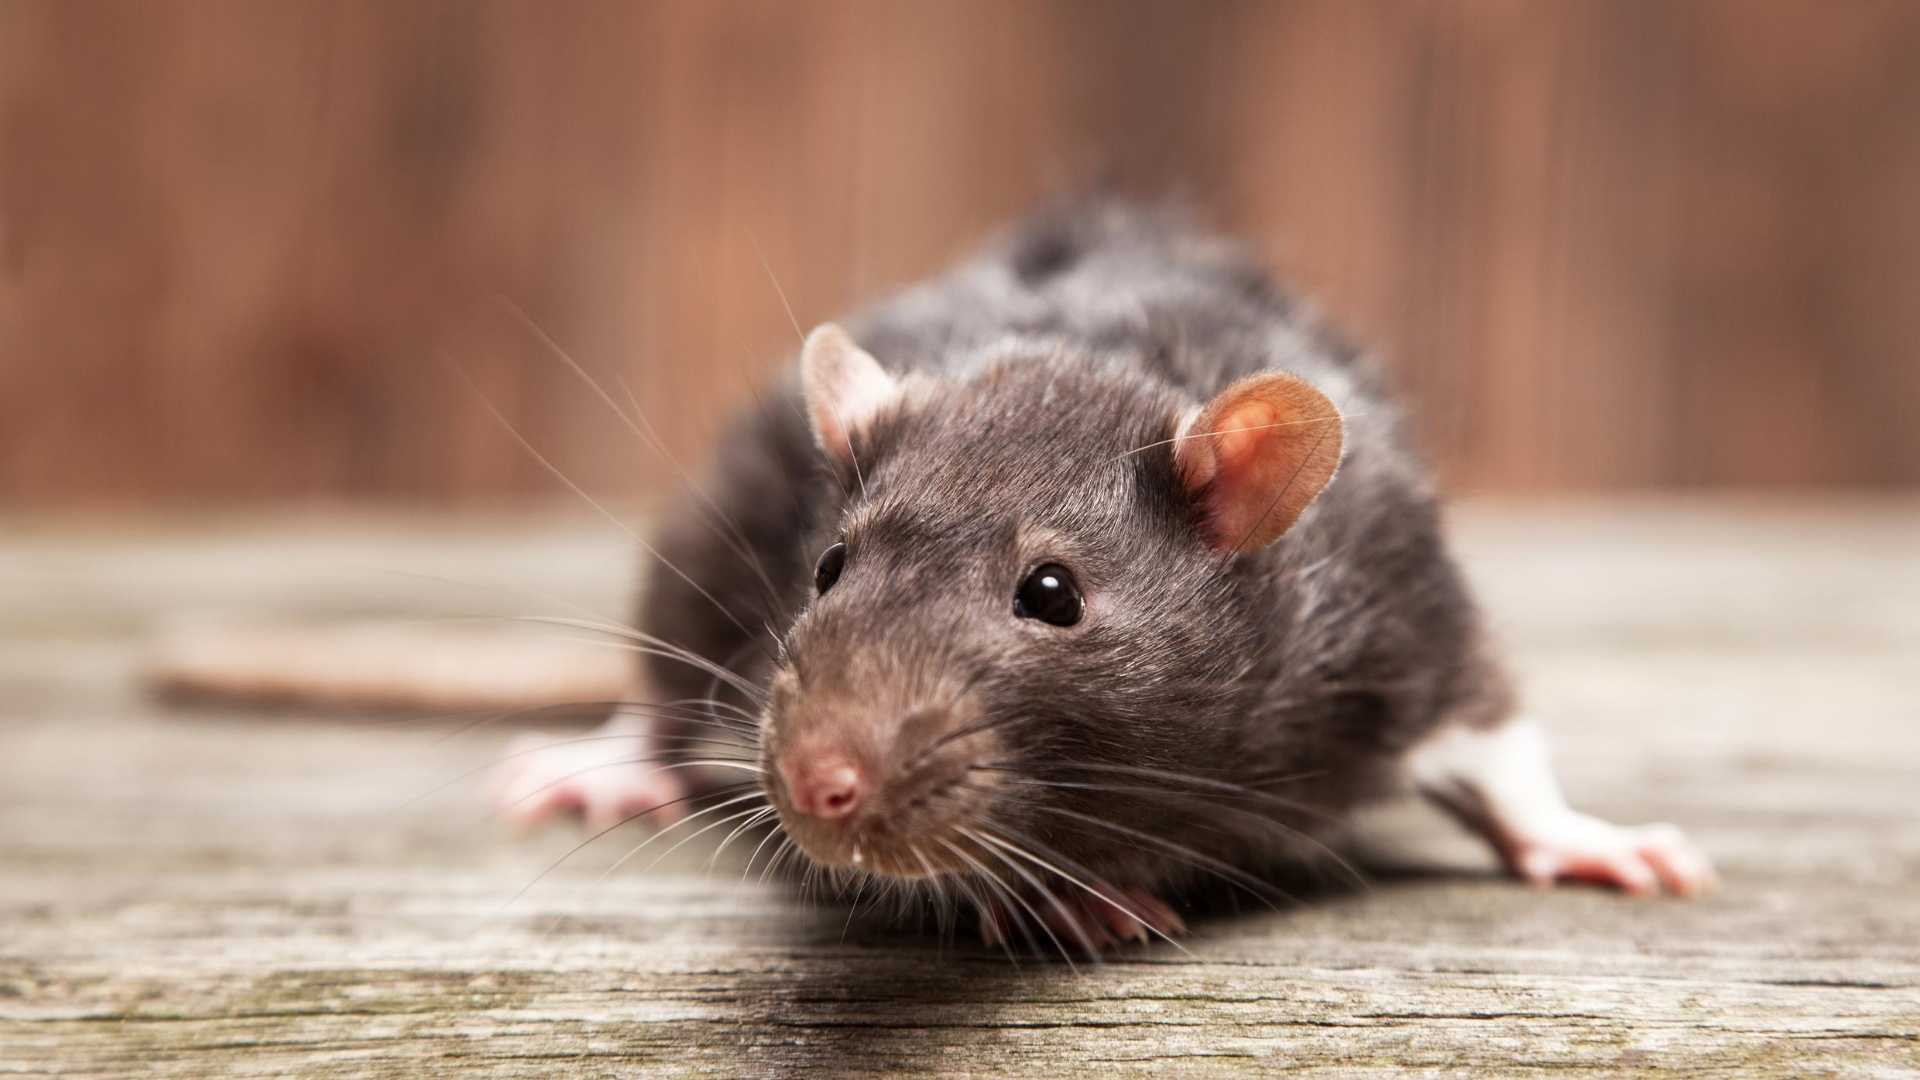 rat on wooden surface looking around